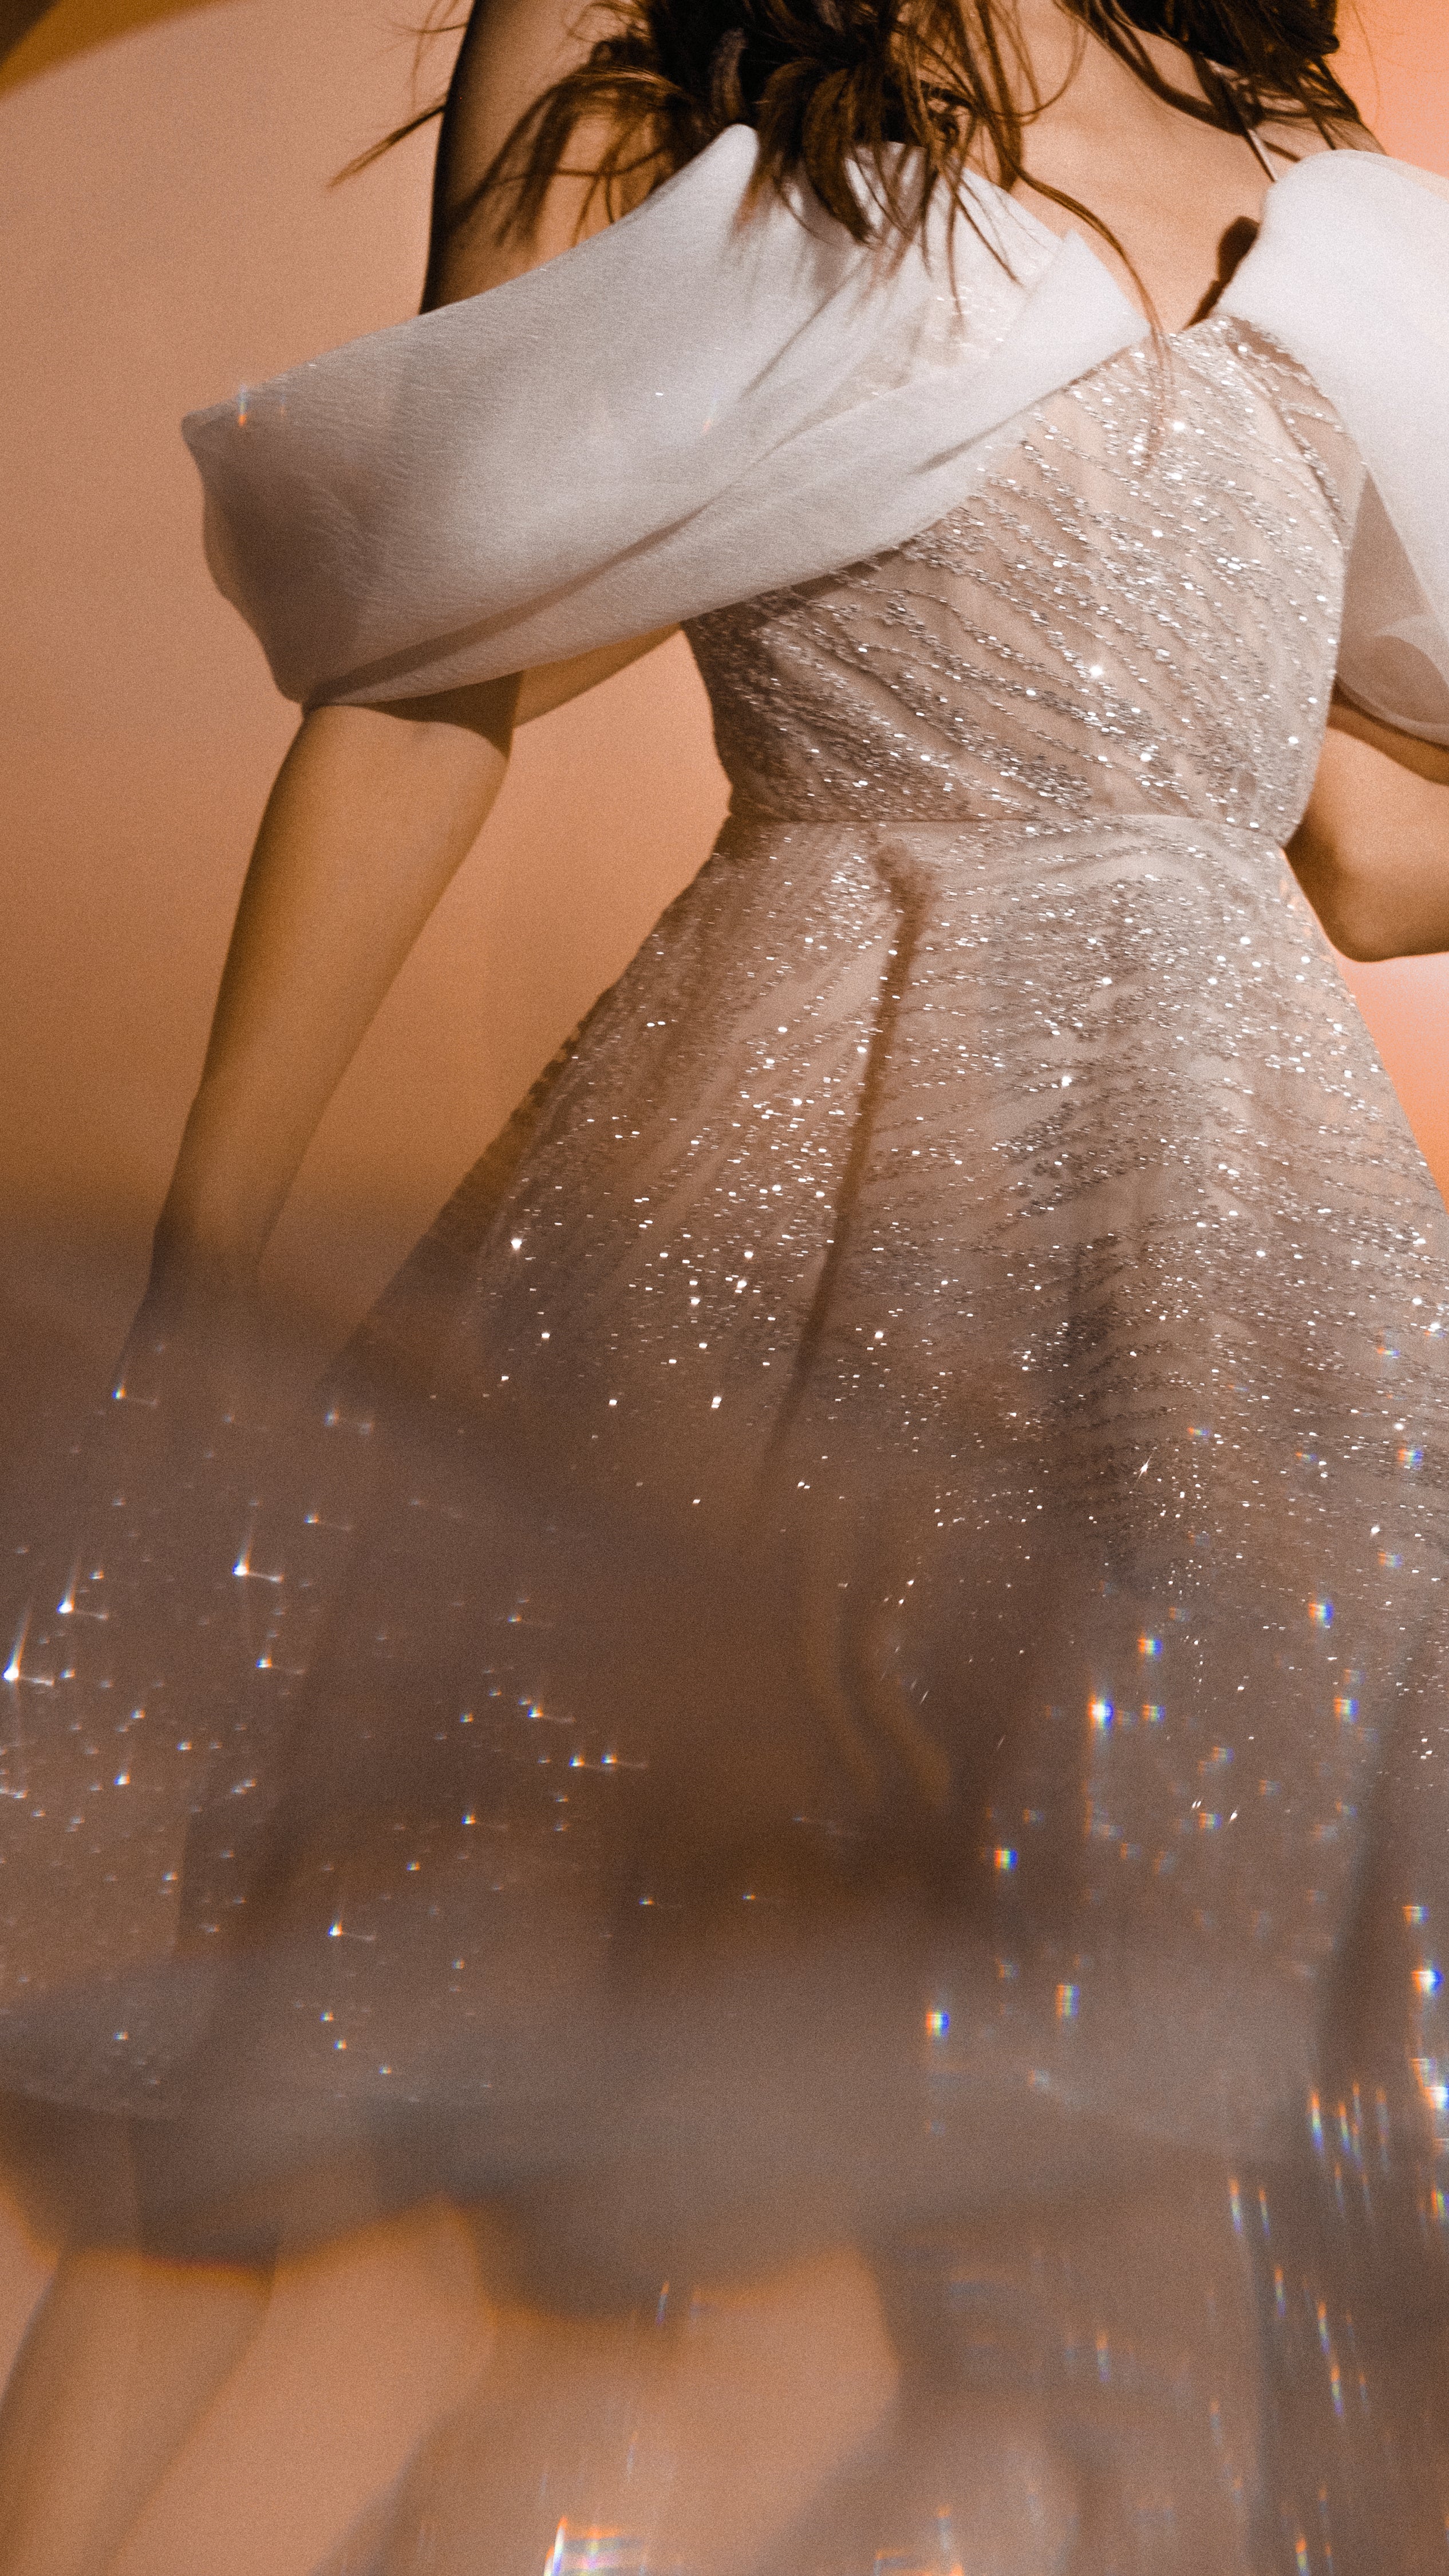 A-Line Wedding Dresses & Gowns - Largest Selection - Kleinfeld | Kleinfeld  Bridal